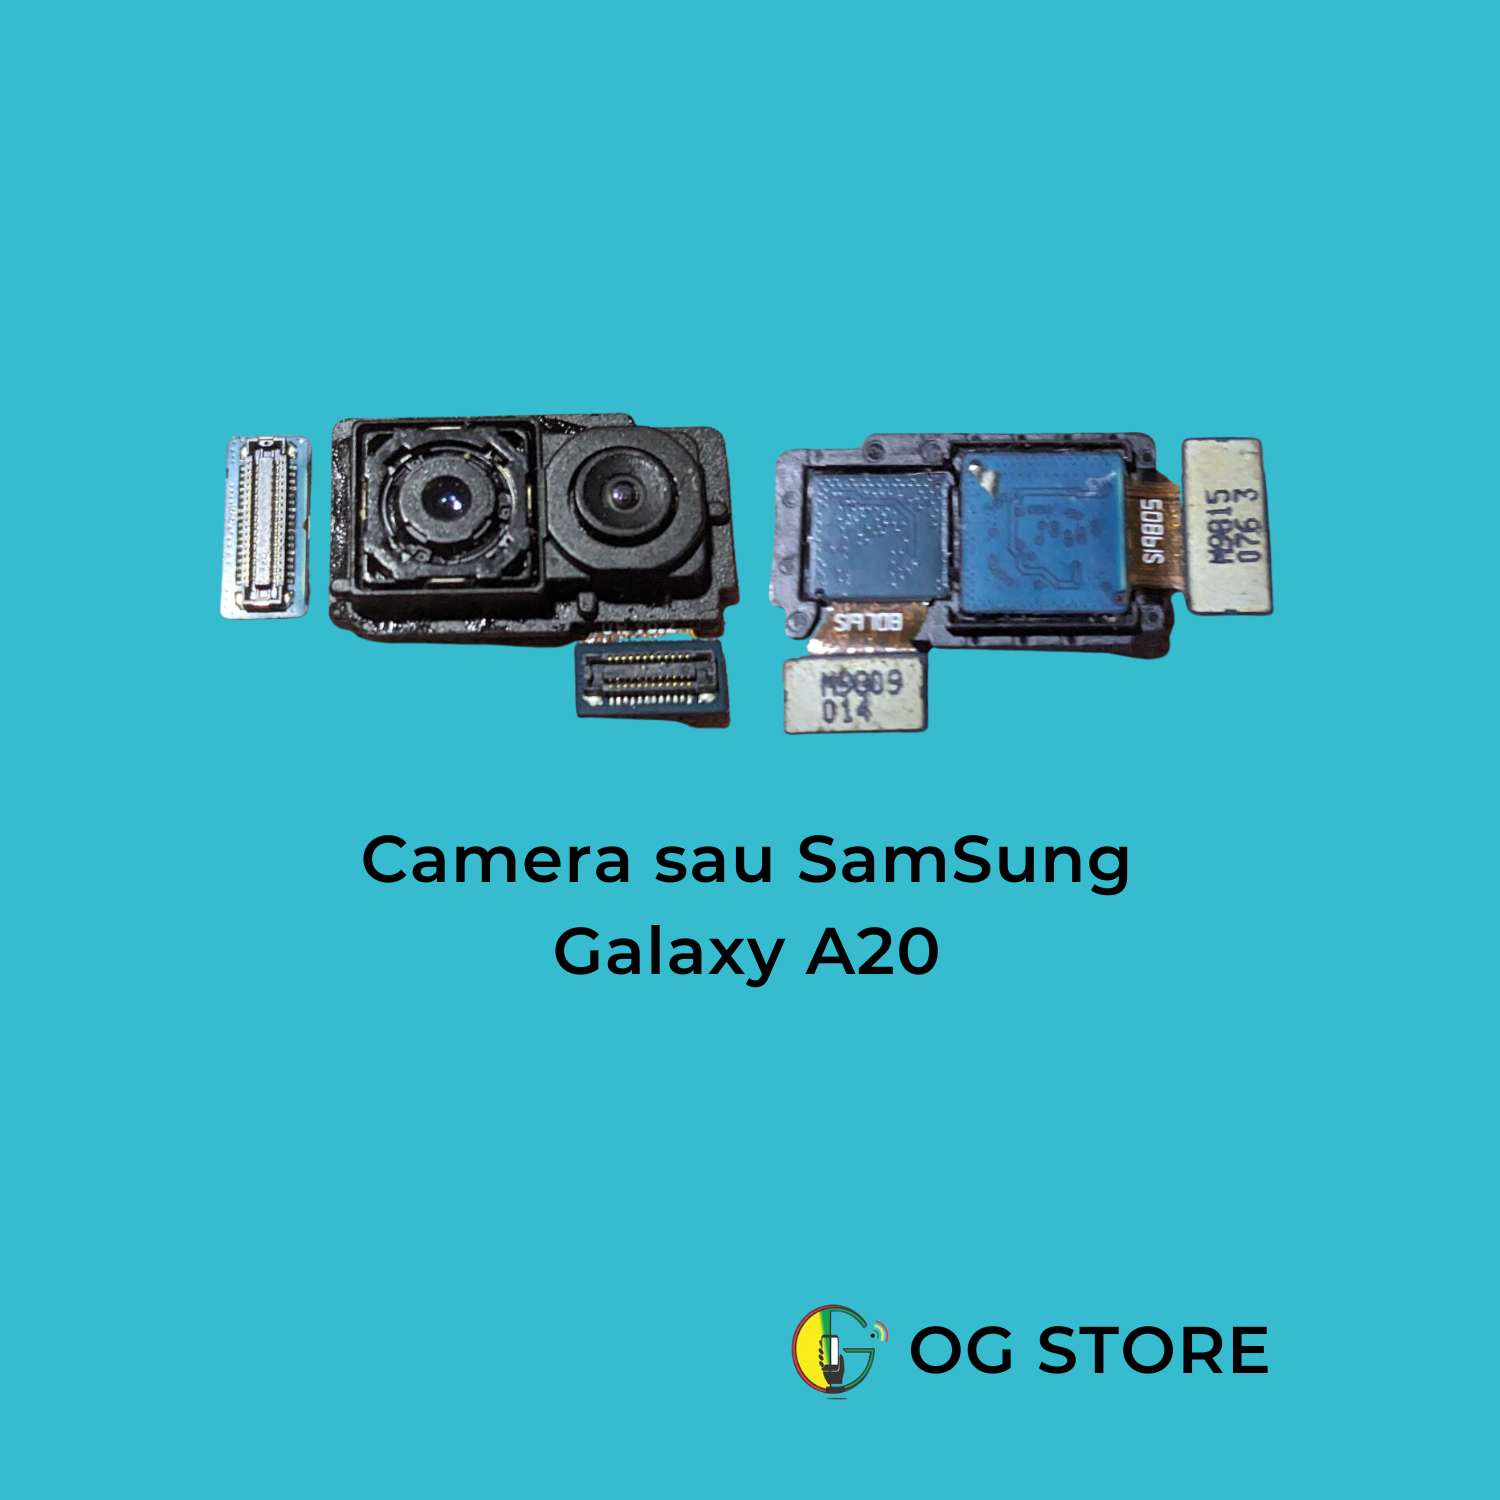 Camera sau SamSung Galaxy A20 tháo máy